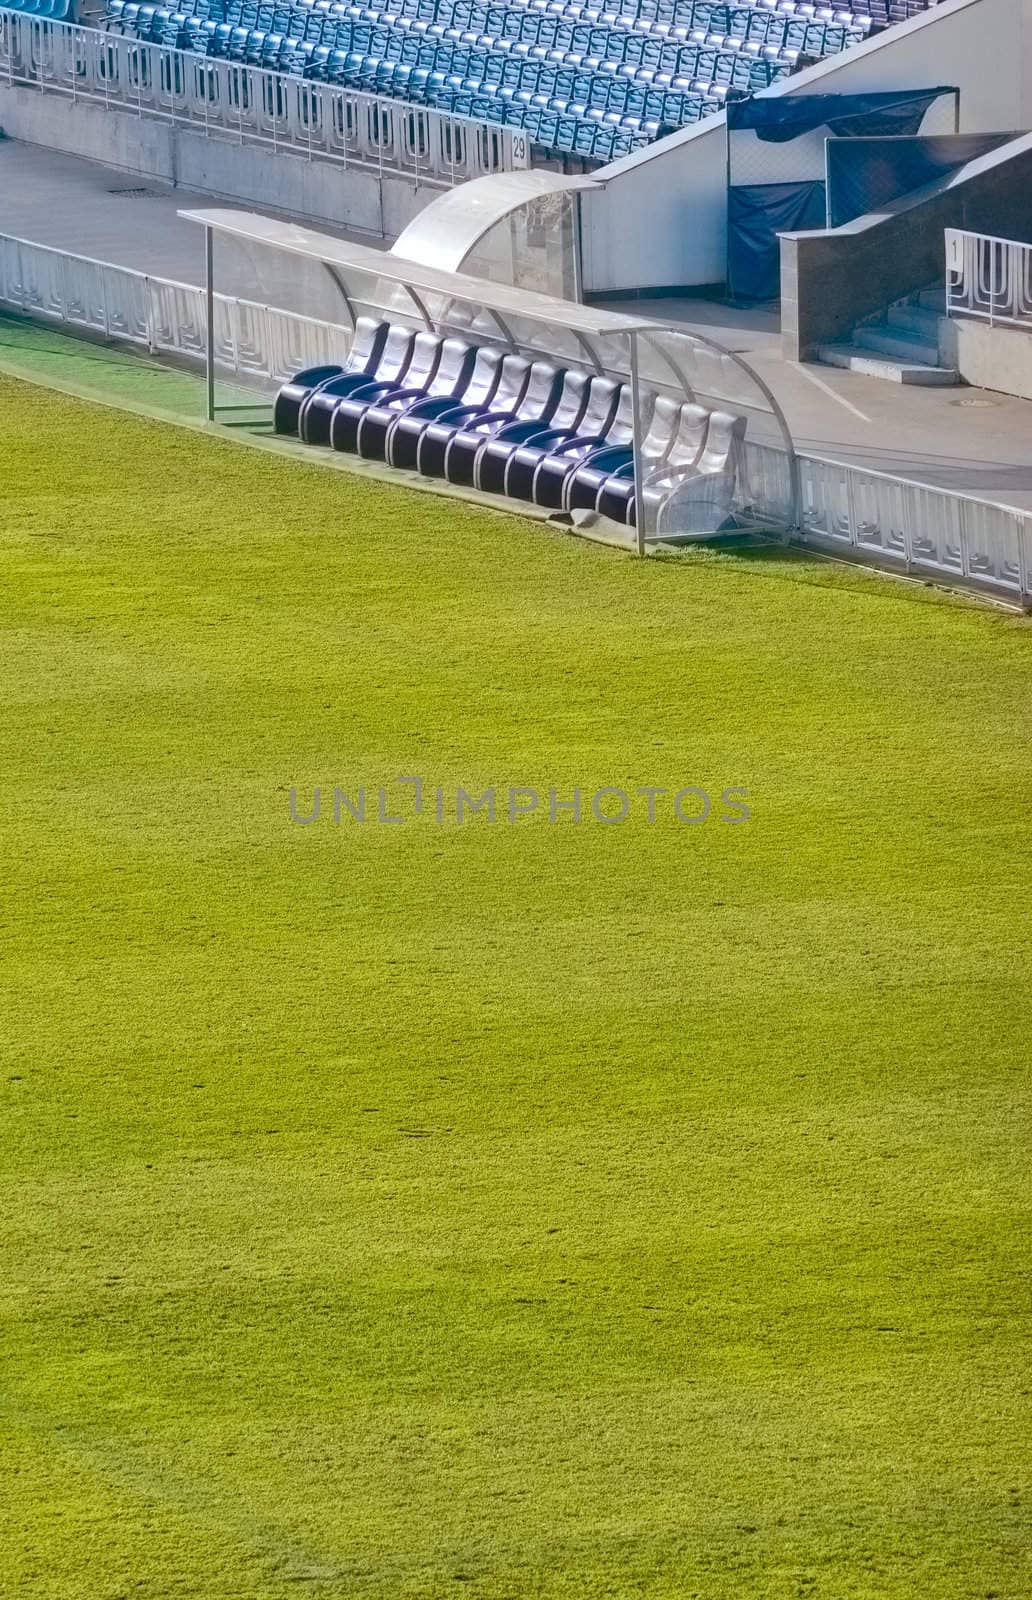 Benchwarmers on an empty soccer field